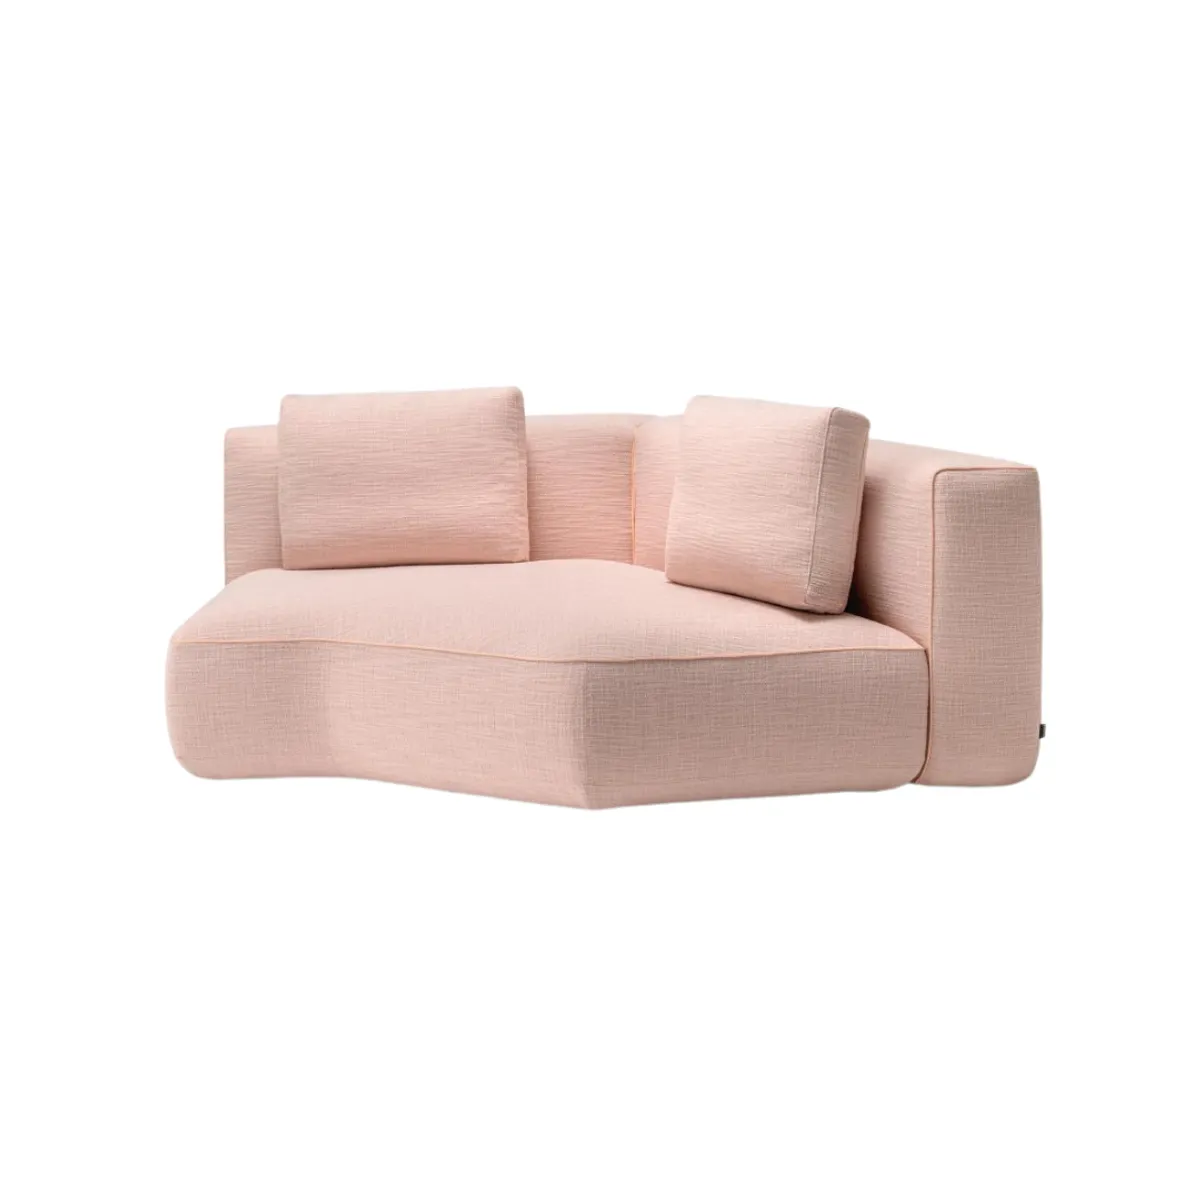 Jeff modular corner sofa 1